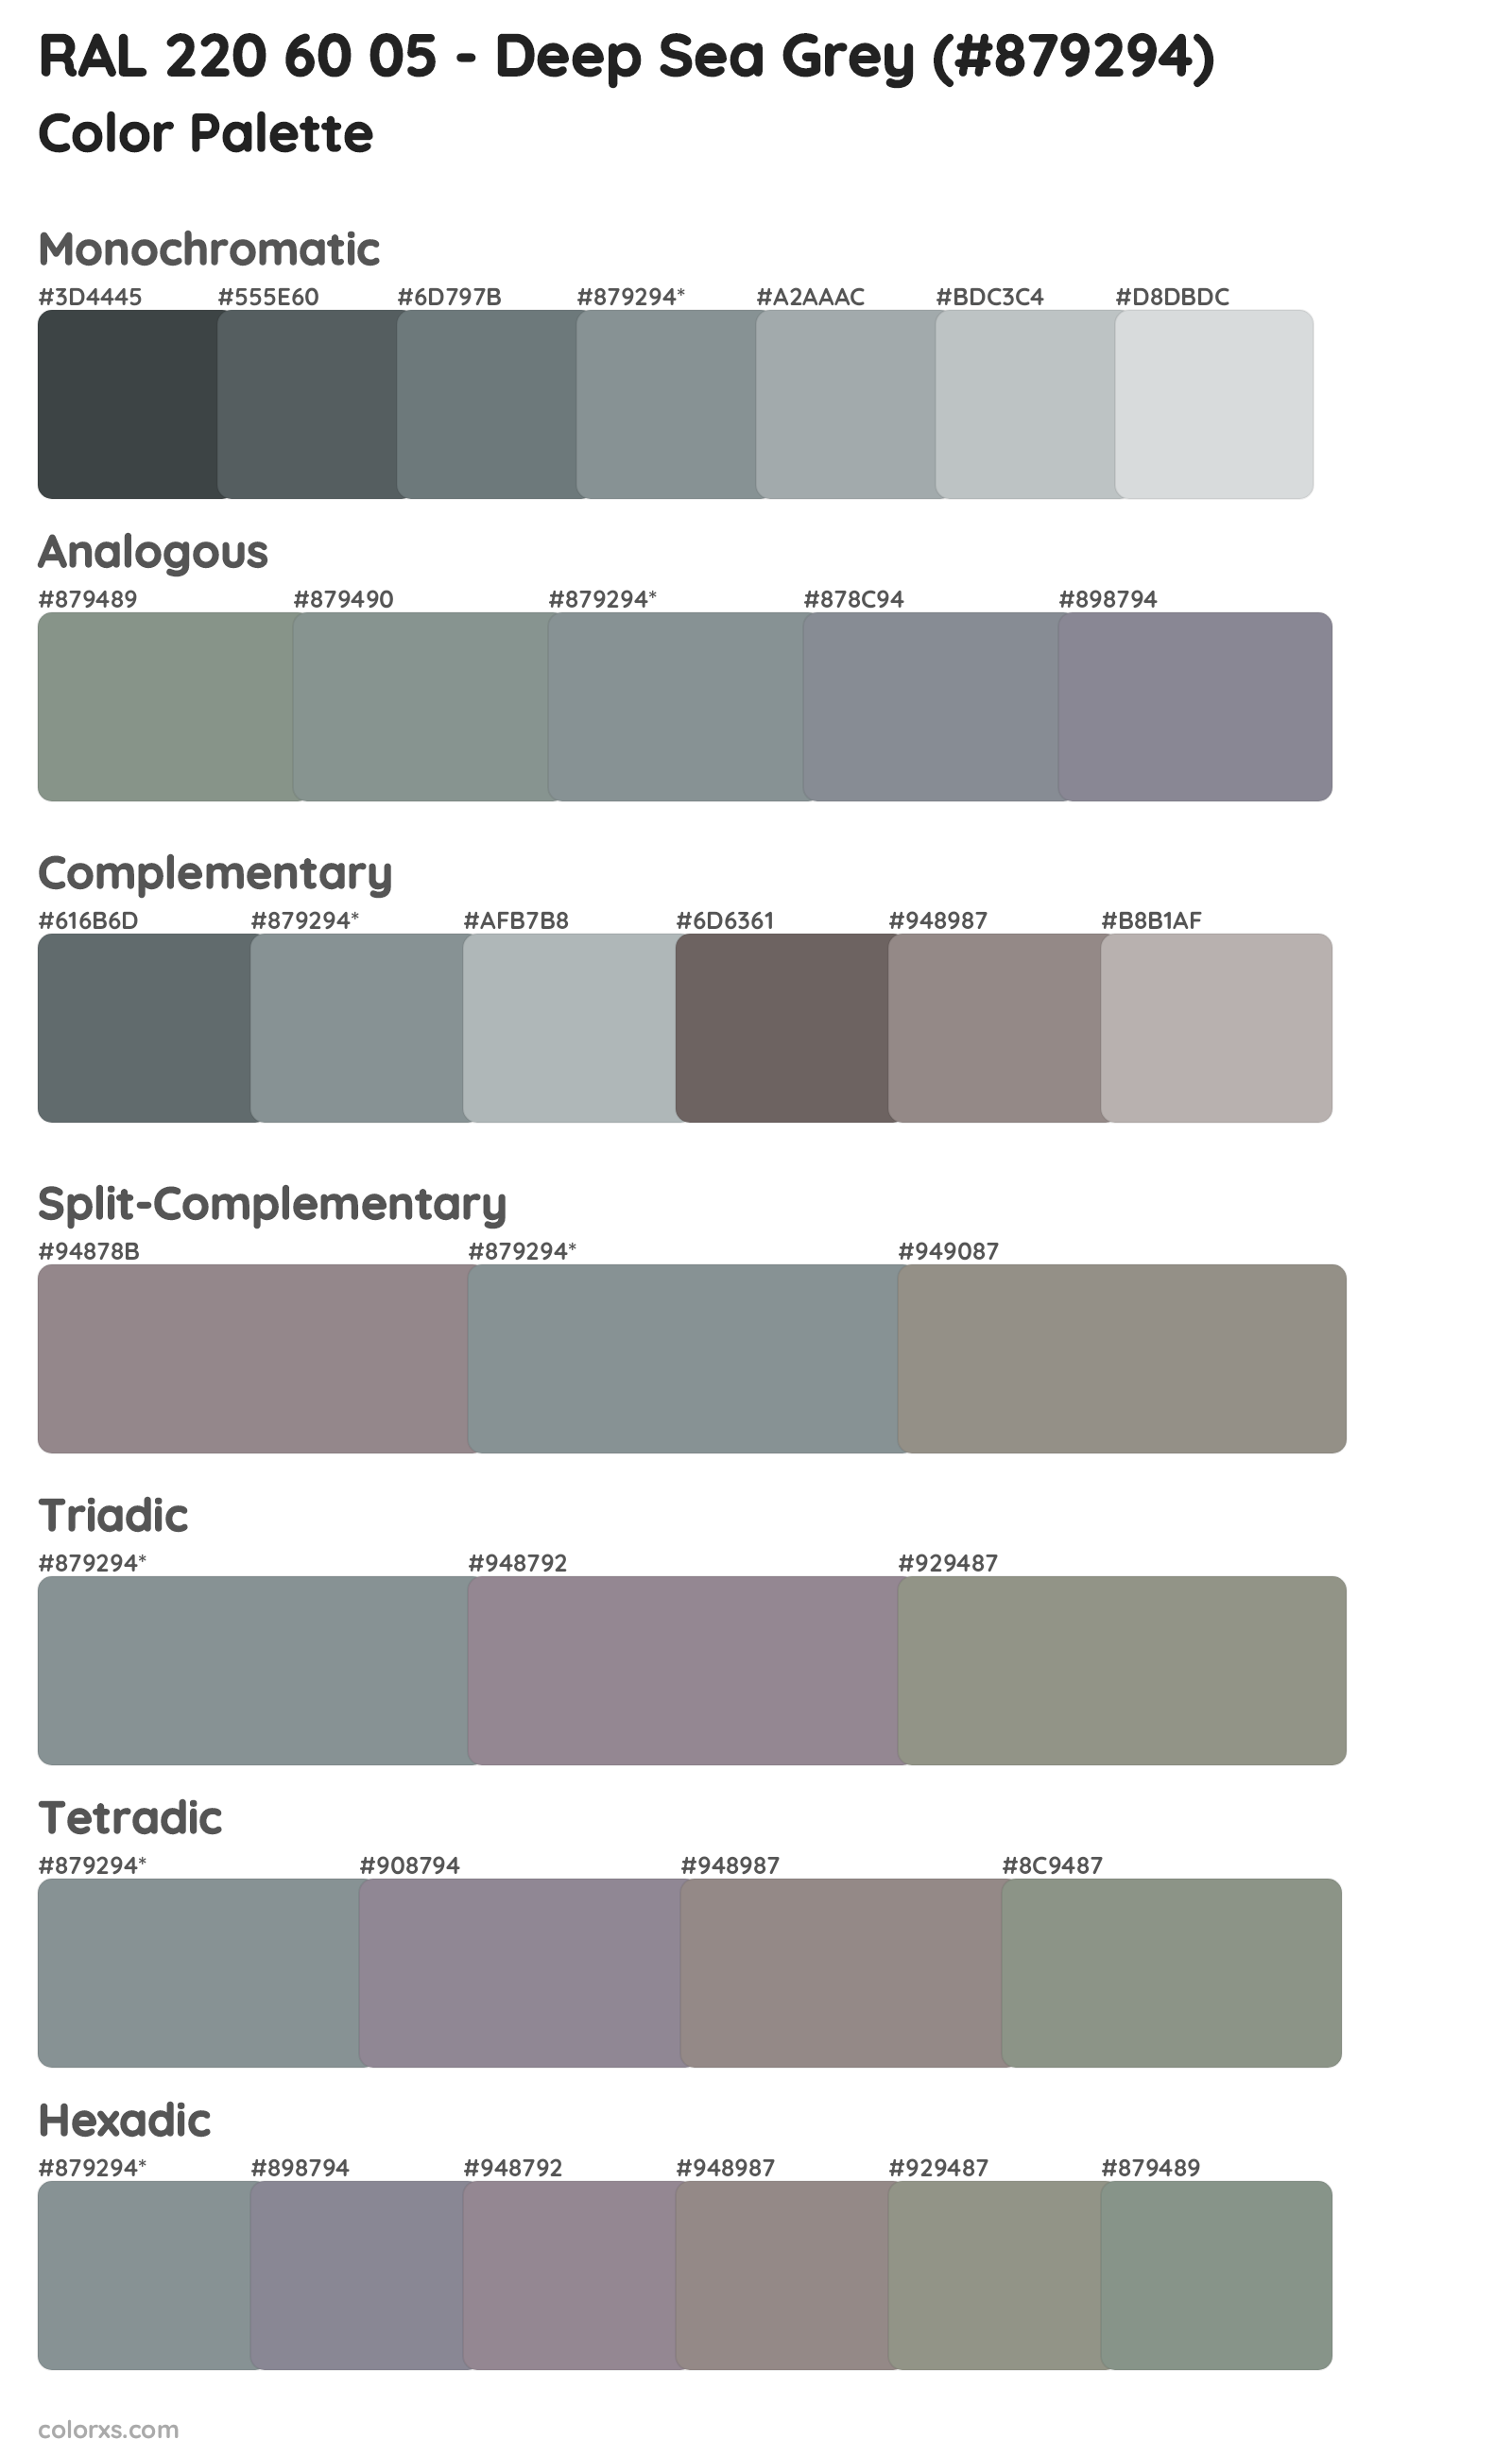 RAL 220 60 05 - Deep Sea Grey Color Scheme Palettes